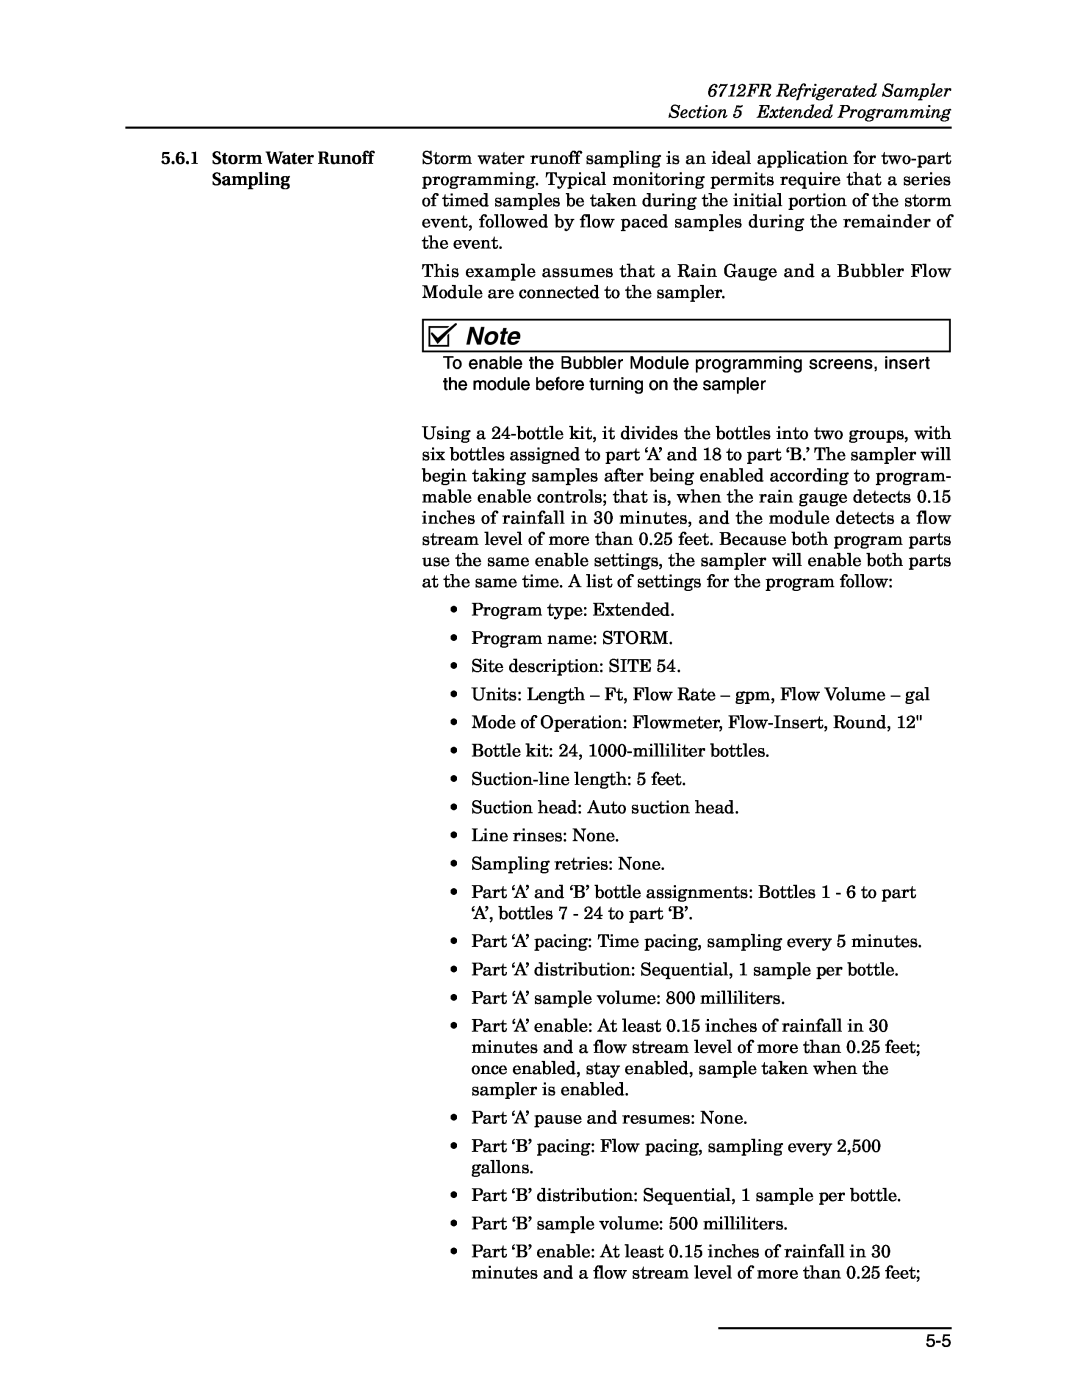 Teledyne manual 6712FR Refrigerated Sampler Extended Programming, Sampling 